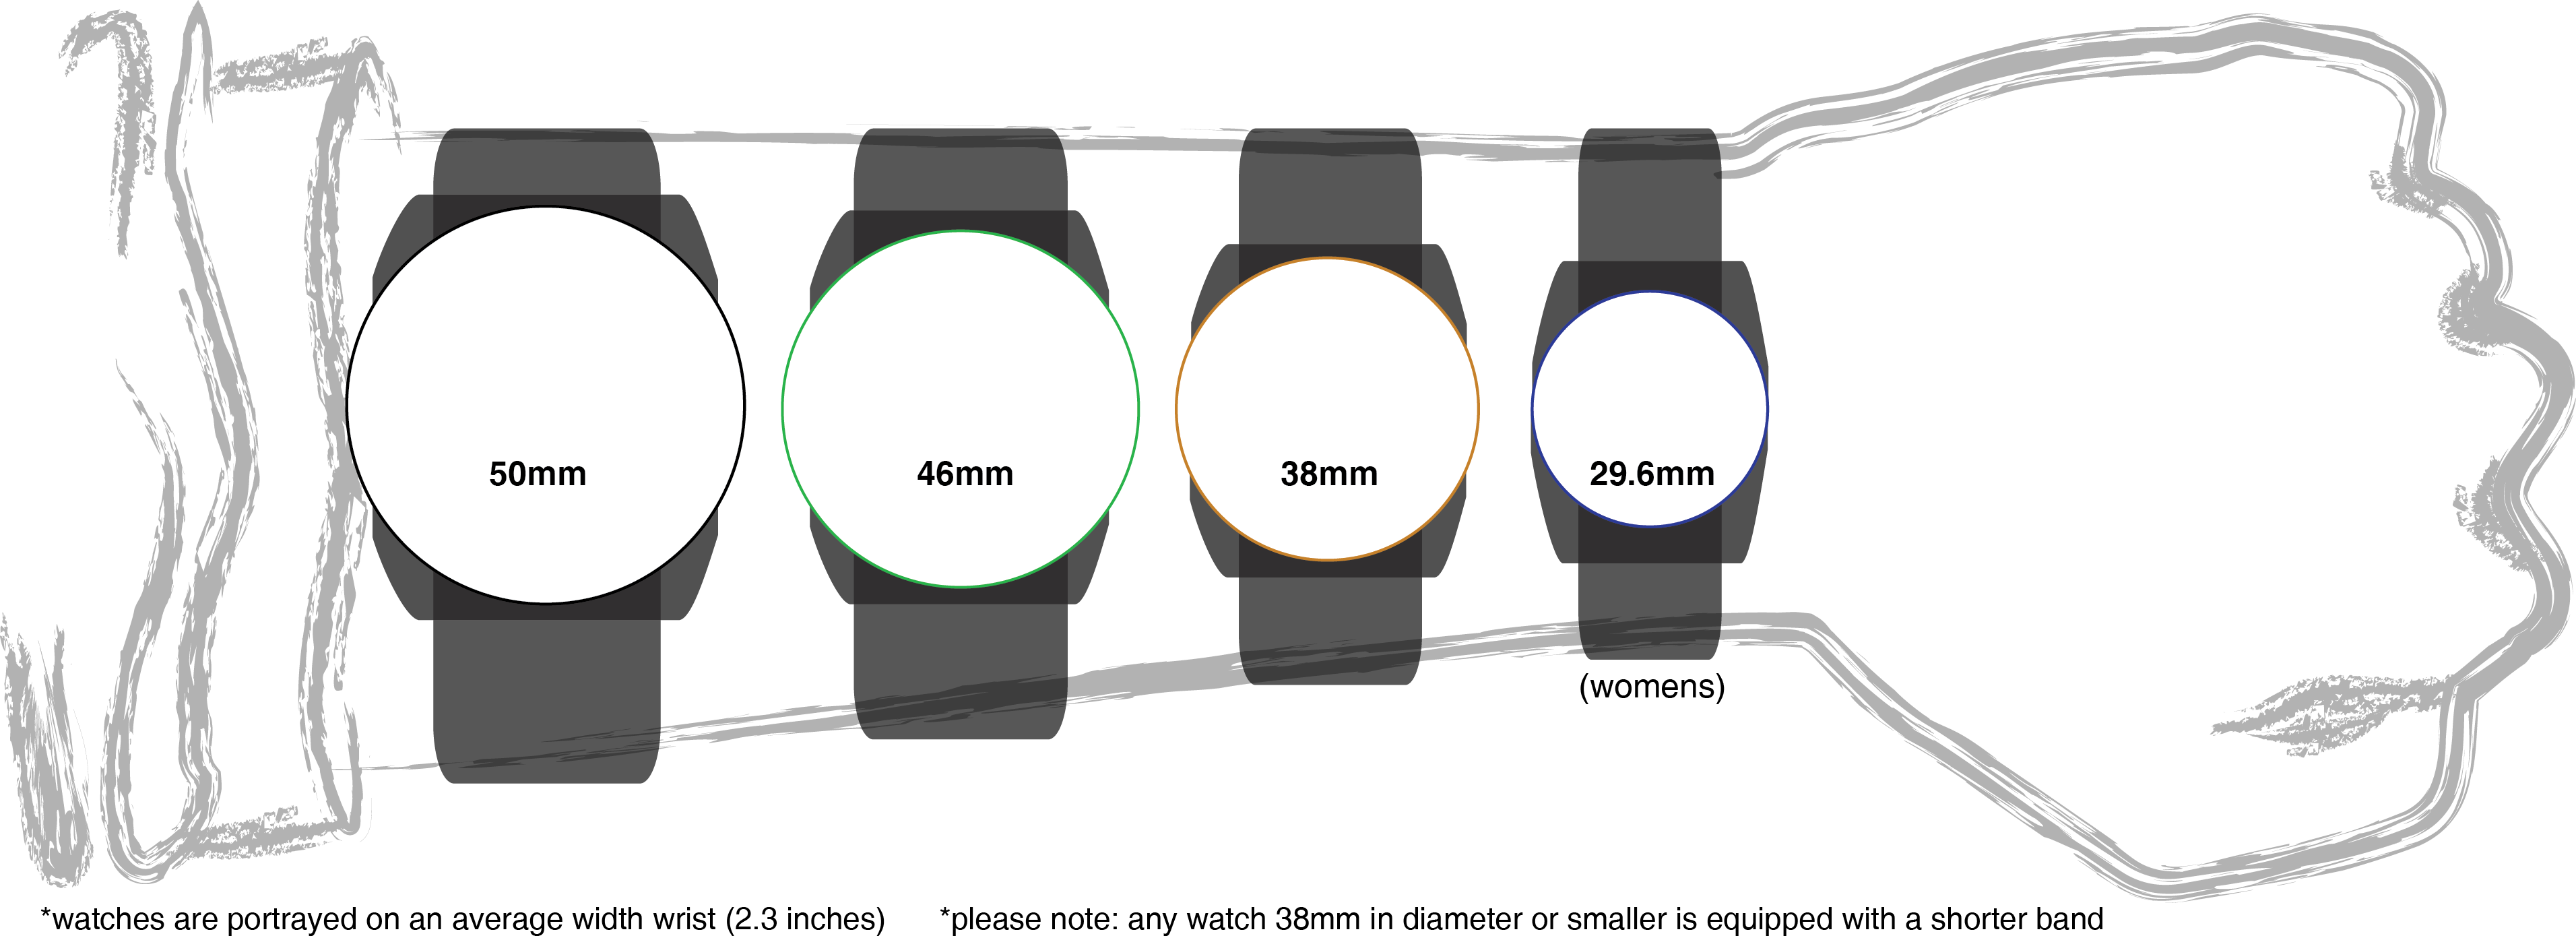 Tactical Watch Size Chart | Tactical Watch Blog